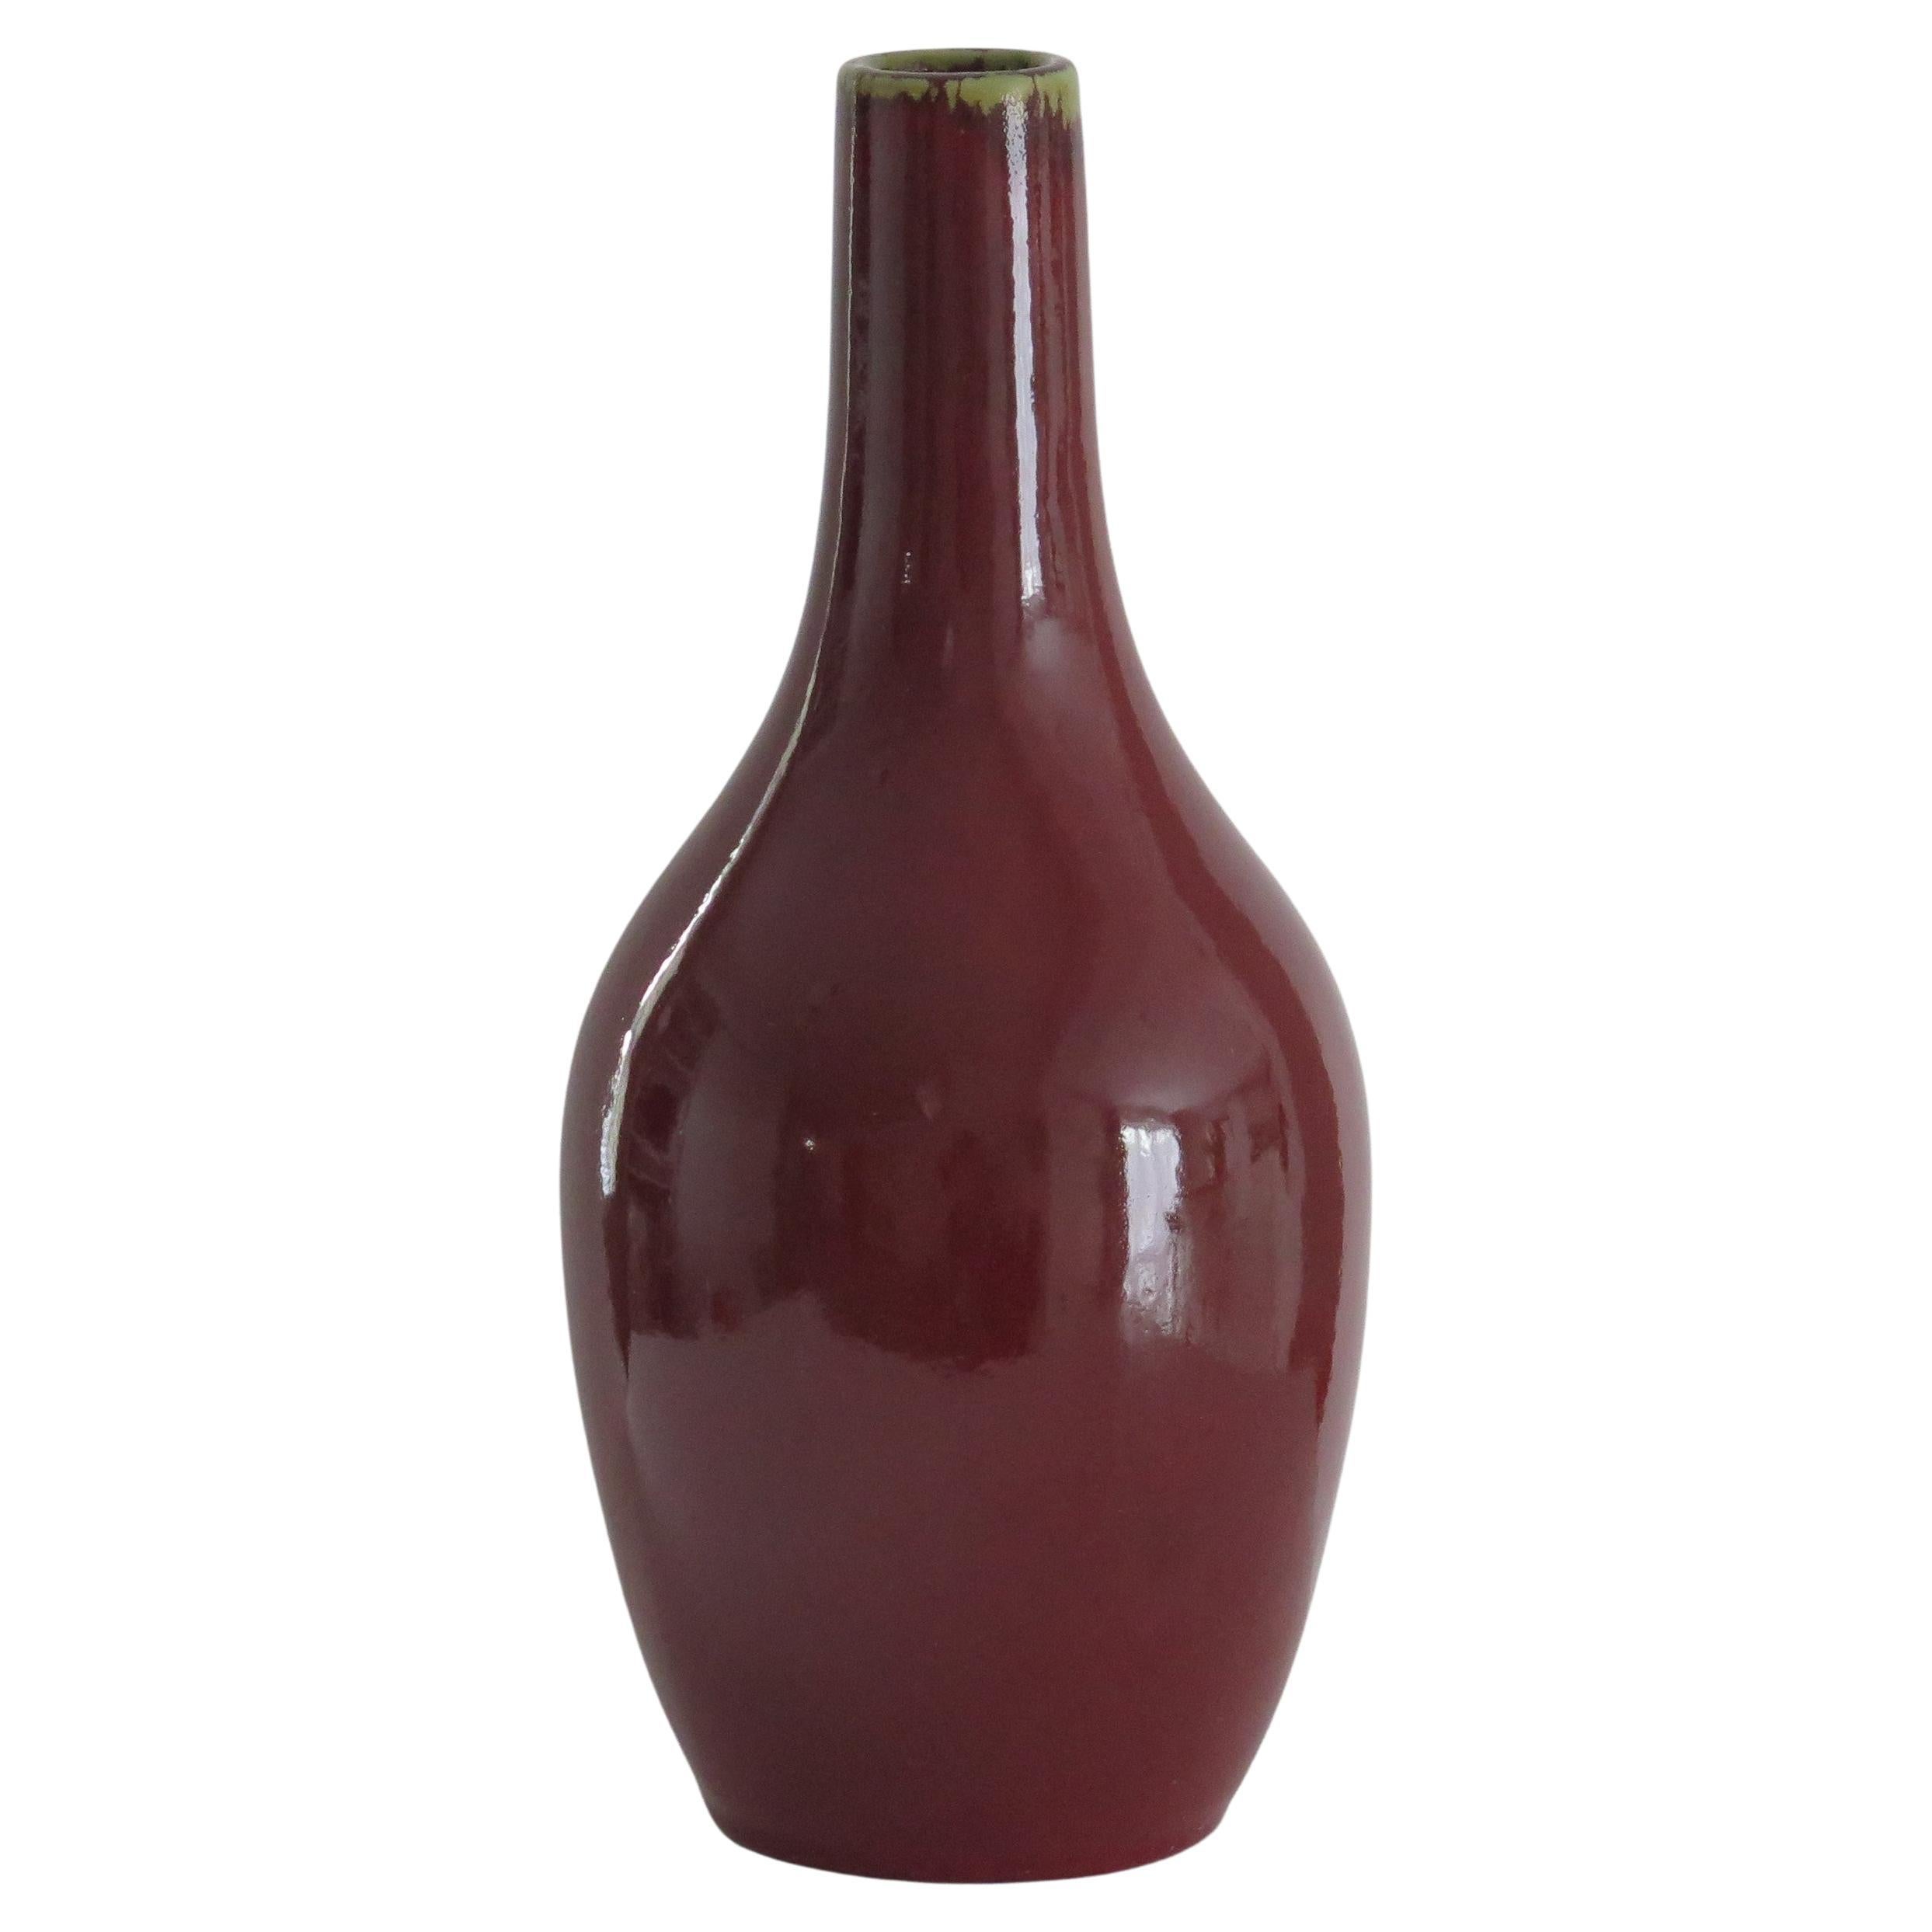 Large 19thC Chinese Export Porcelain Vase  "Sang-de-boeuf" Ox Blood Red, Qing 